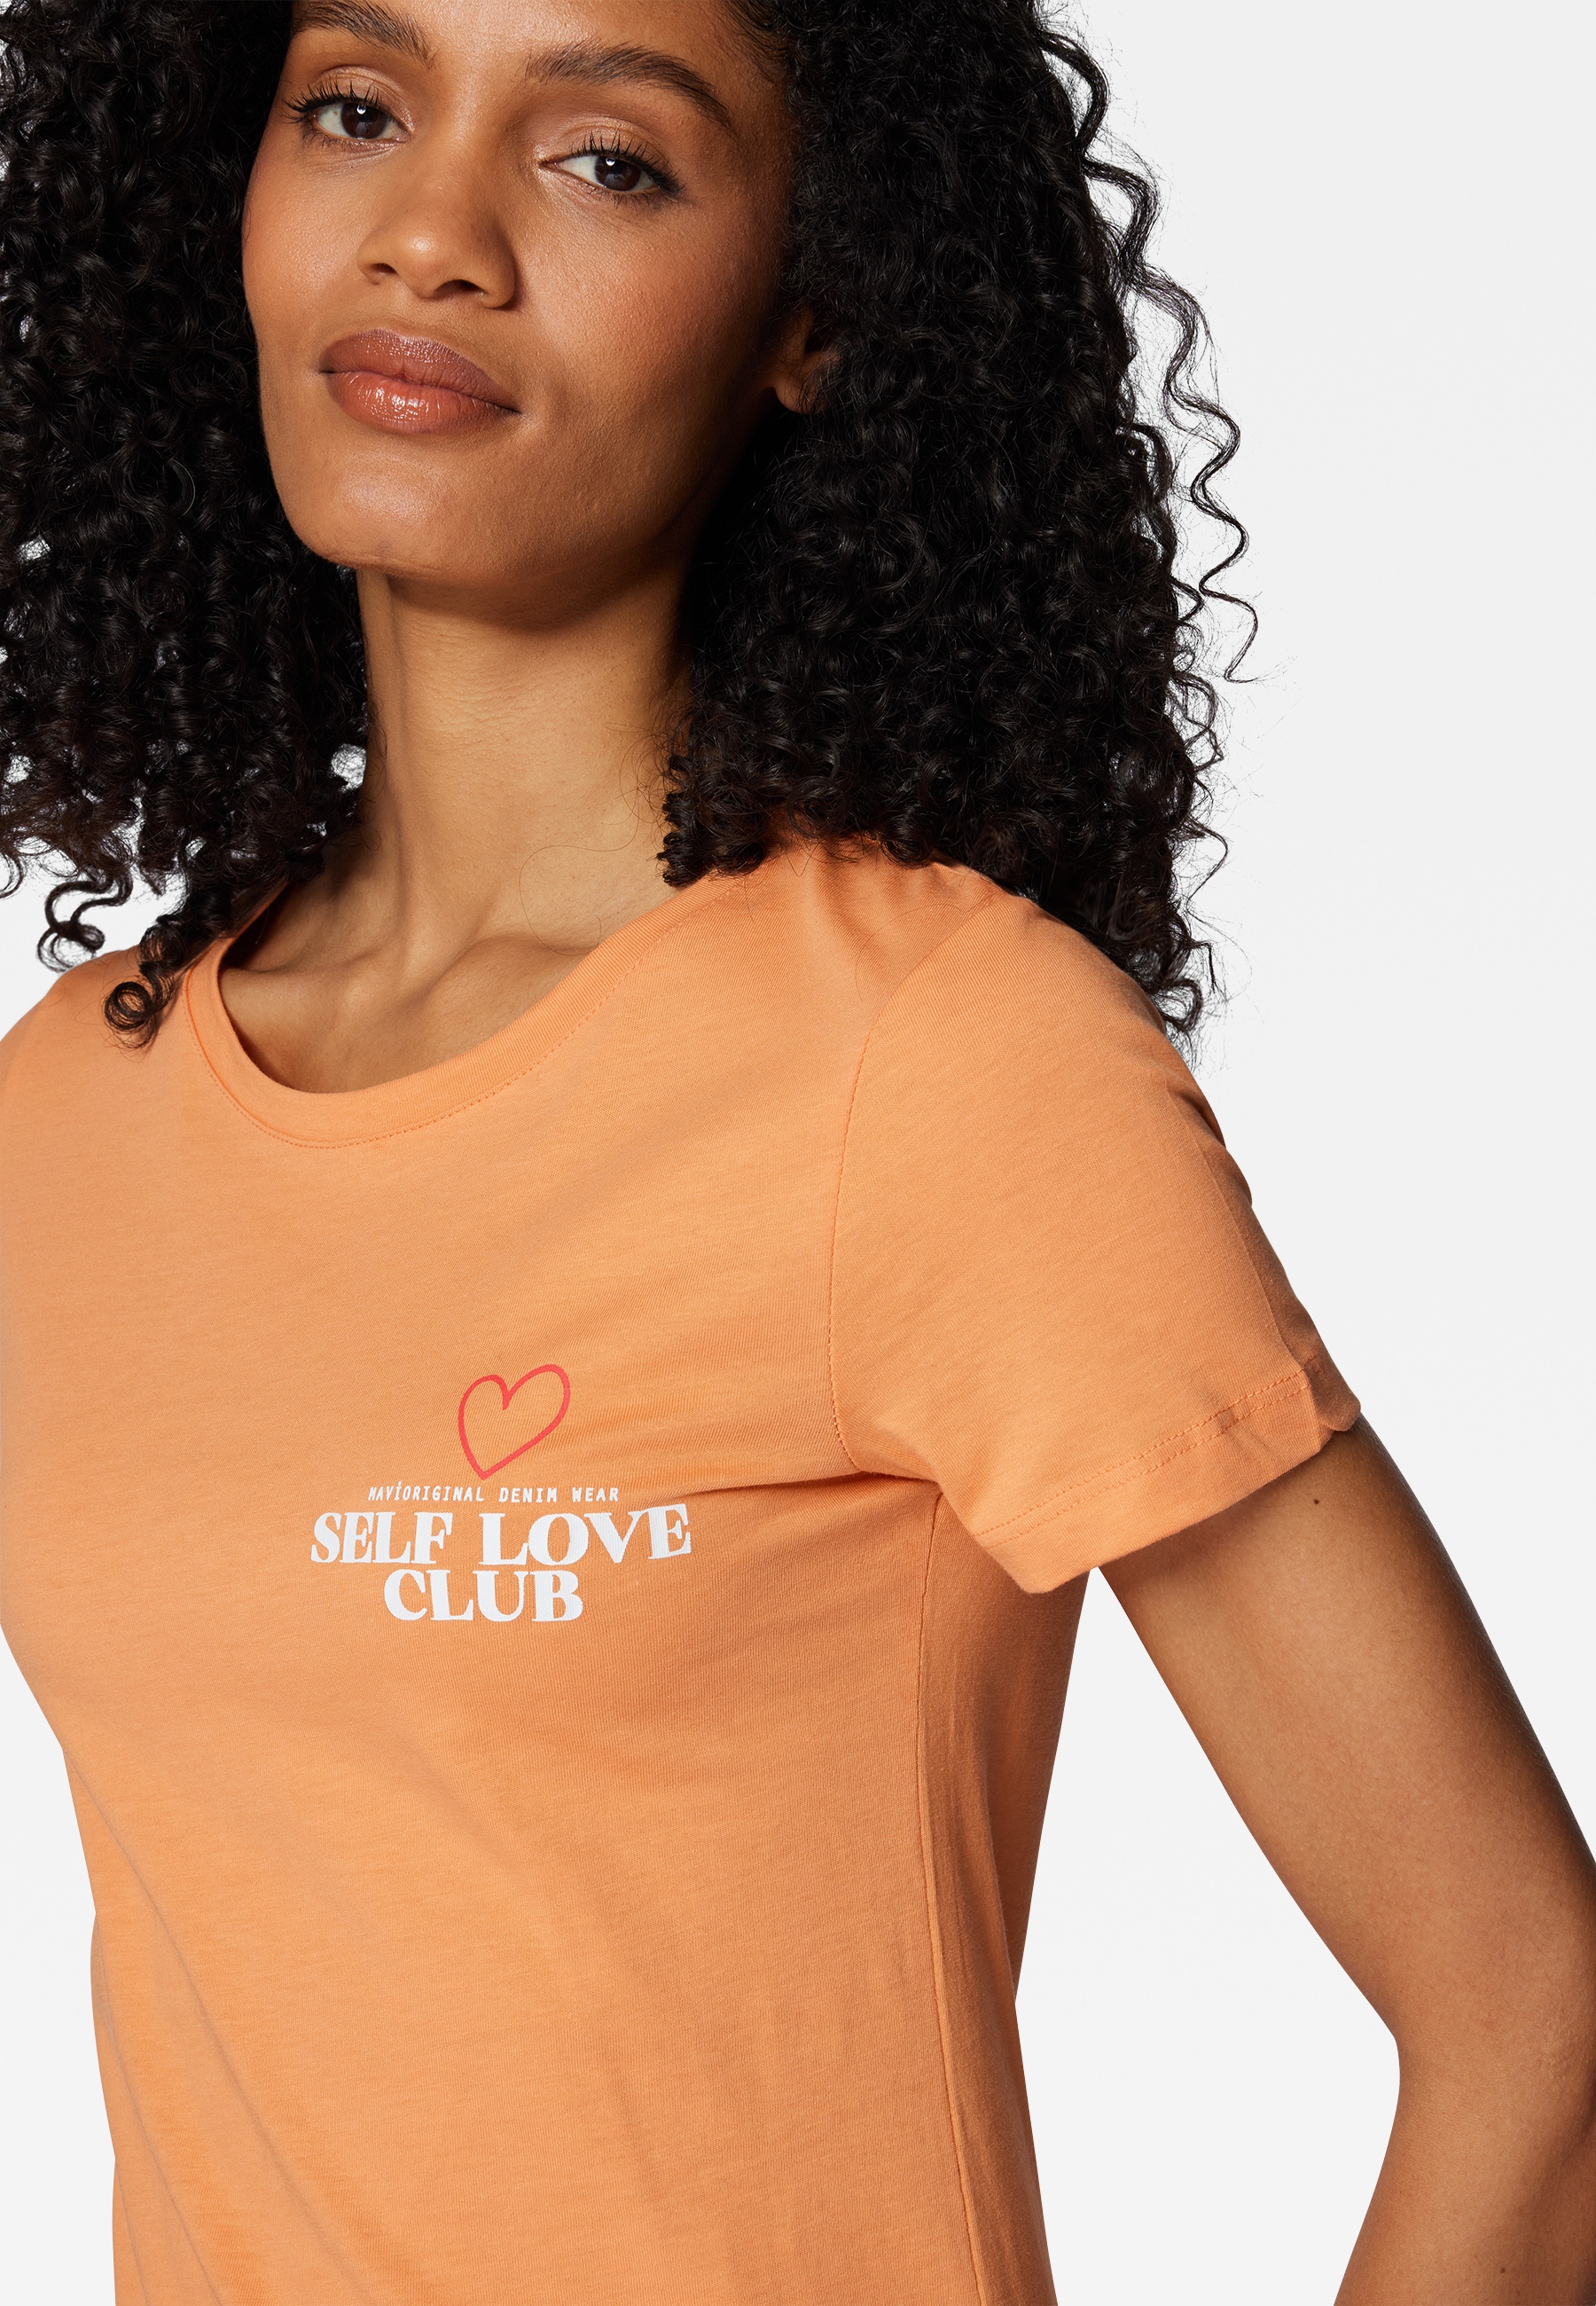 Mavi T-Shirt »SELF LOVE CLUB PRINTED TEE«, T-Shirt mit Druck